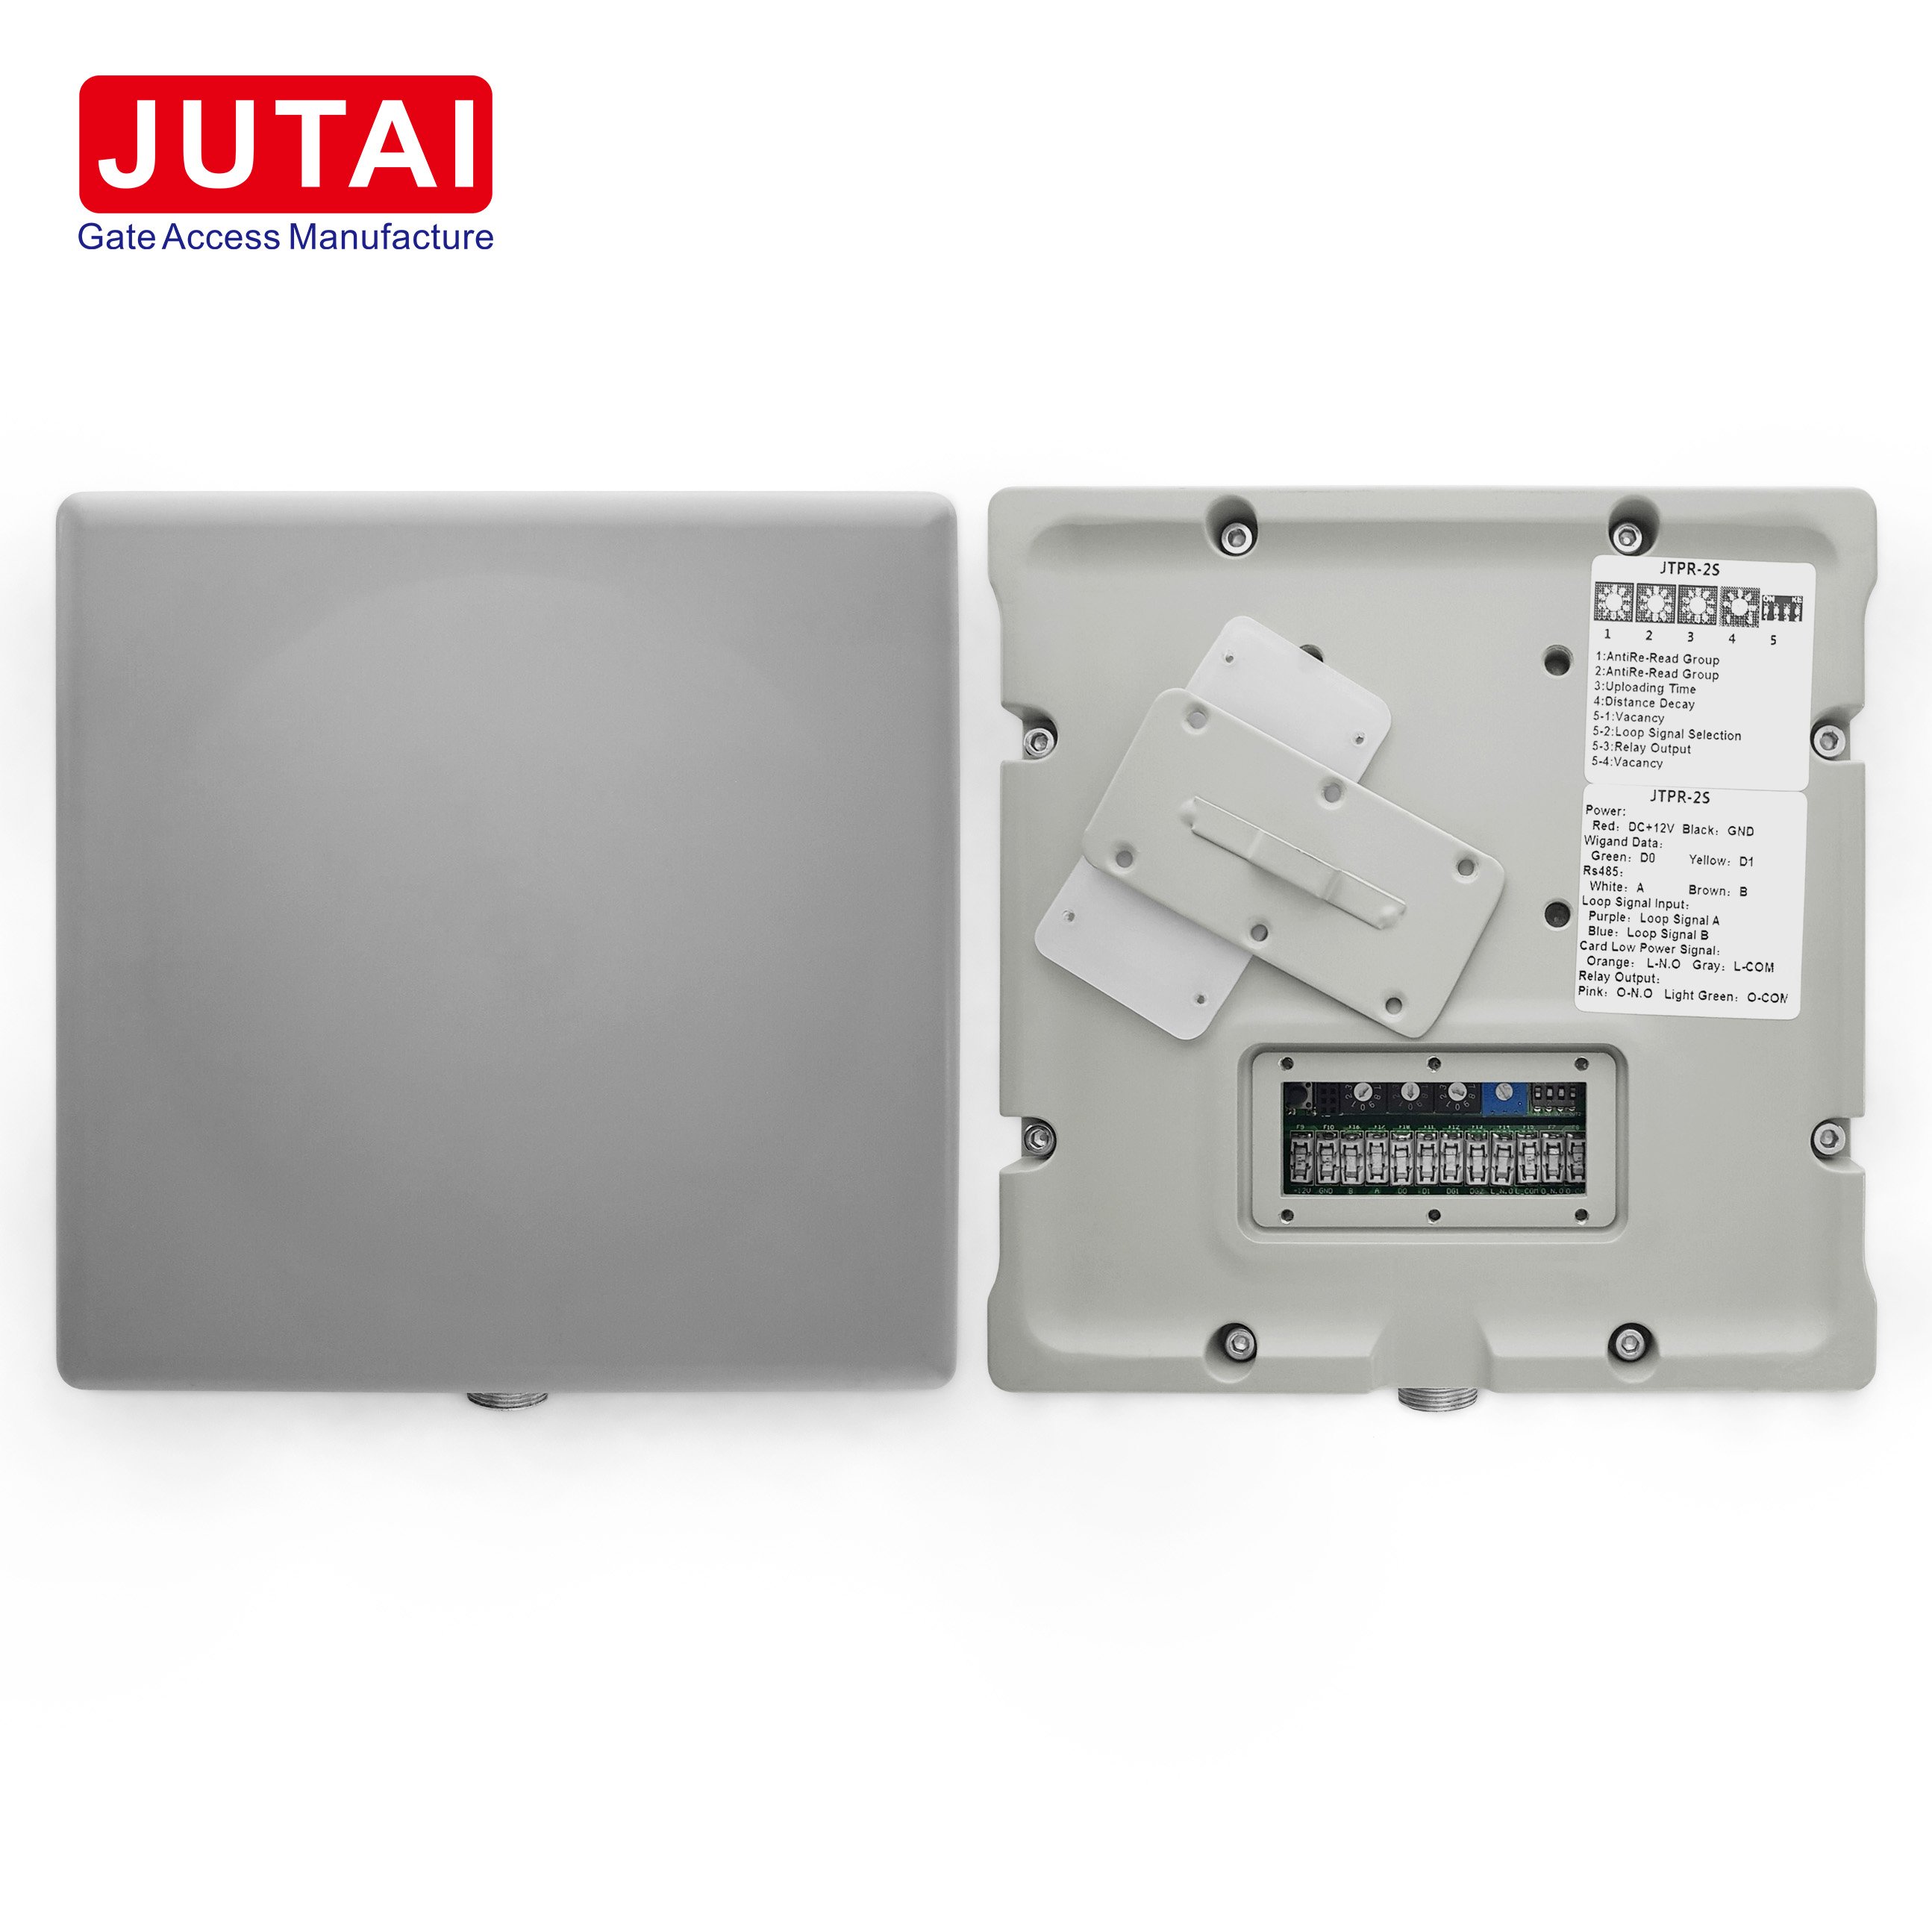 JUTAI Waterproof Long Range Active RFID Reader For Parking Management System